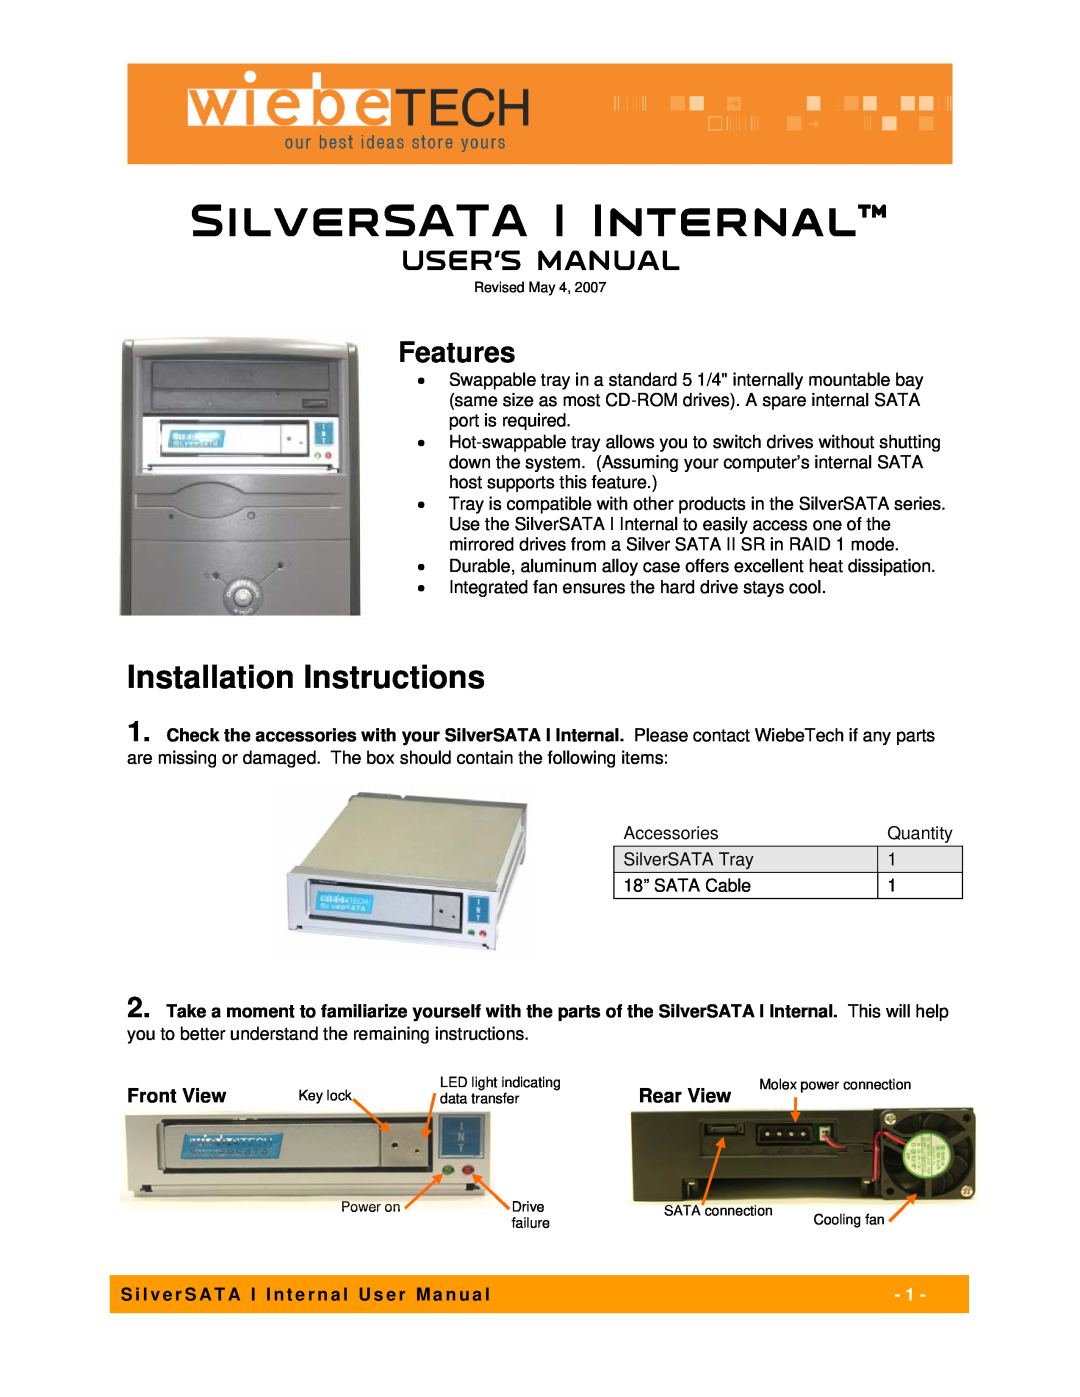 WiebeTech user manual Installation Instructions, SilverSATA I Internal, User’S Manual, Features 